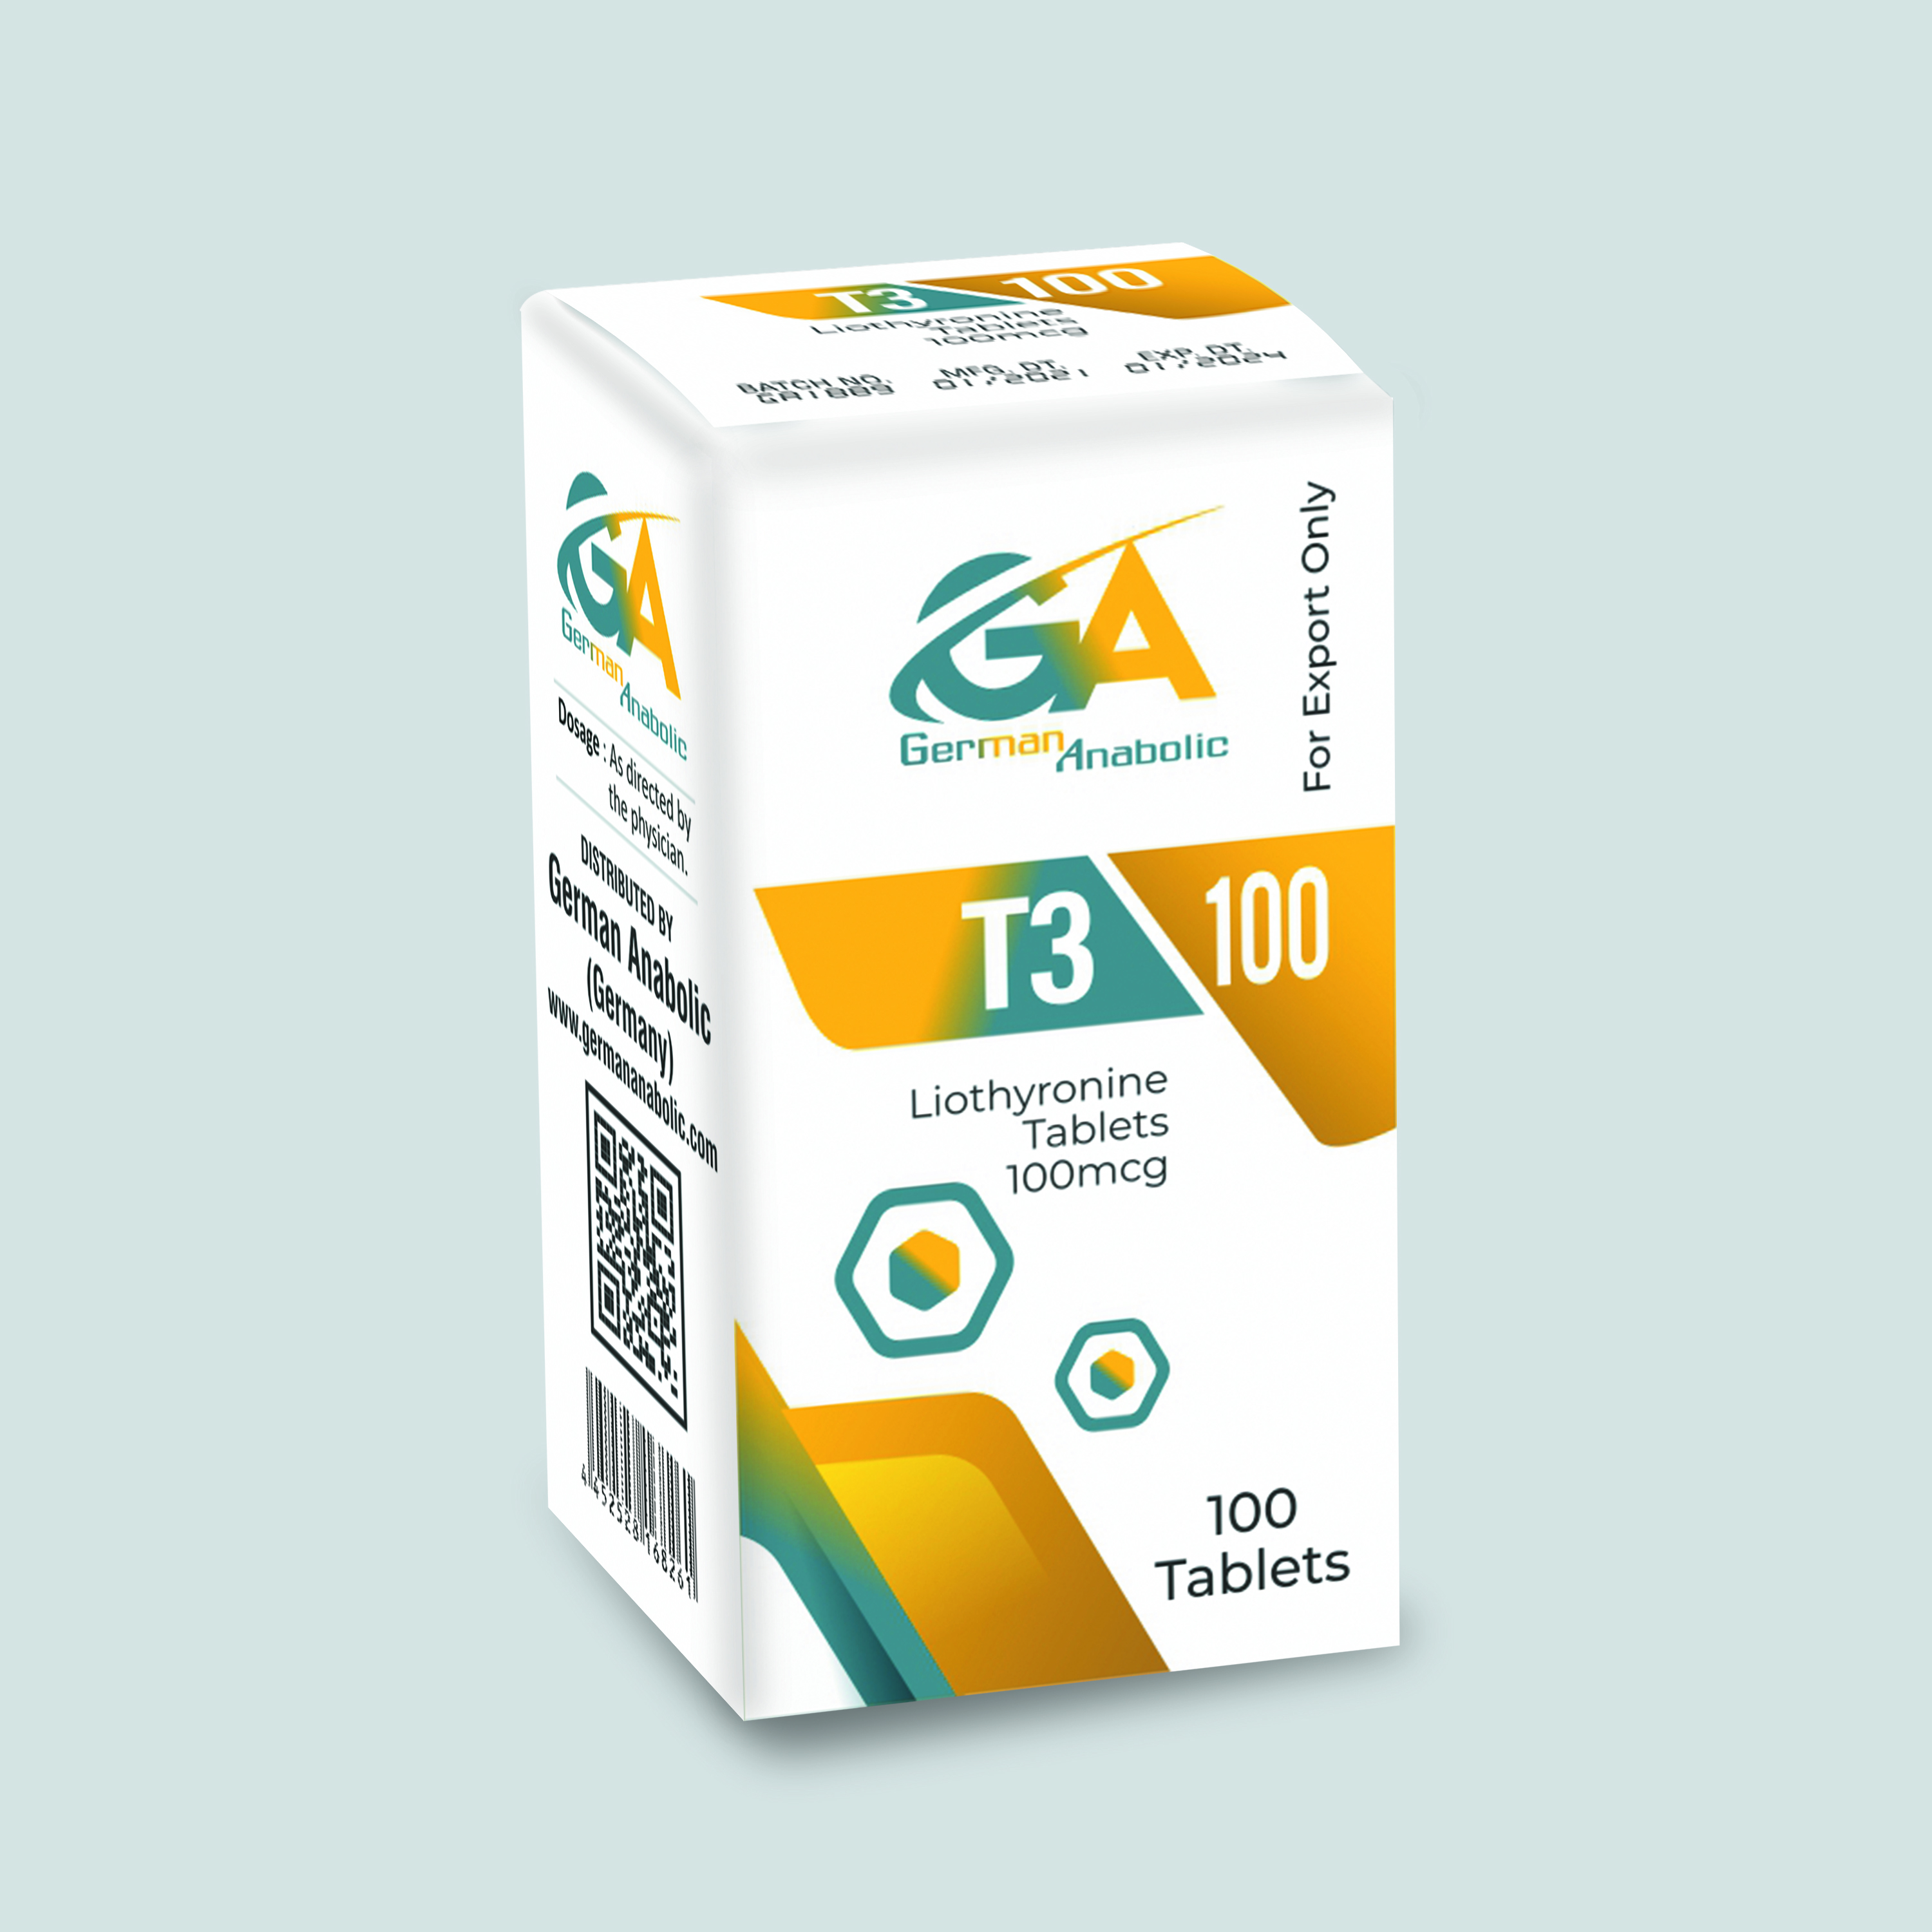 T3 100 { Liothyronine Tablets 100mcg }